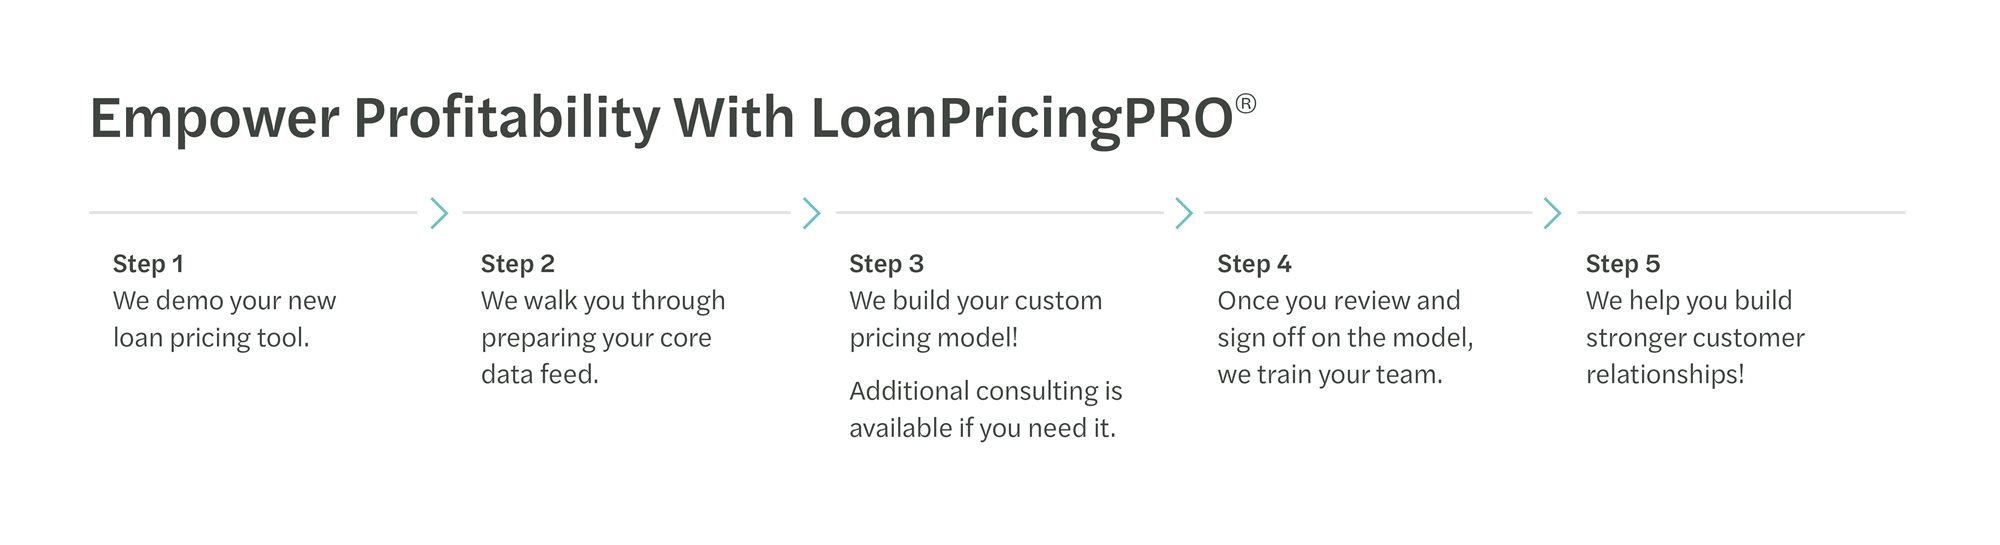 Infographic illustrating LoanPricingPRO Implementation steps.